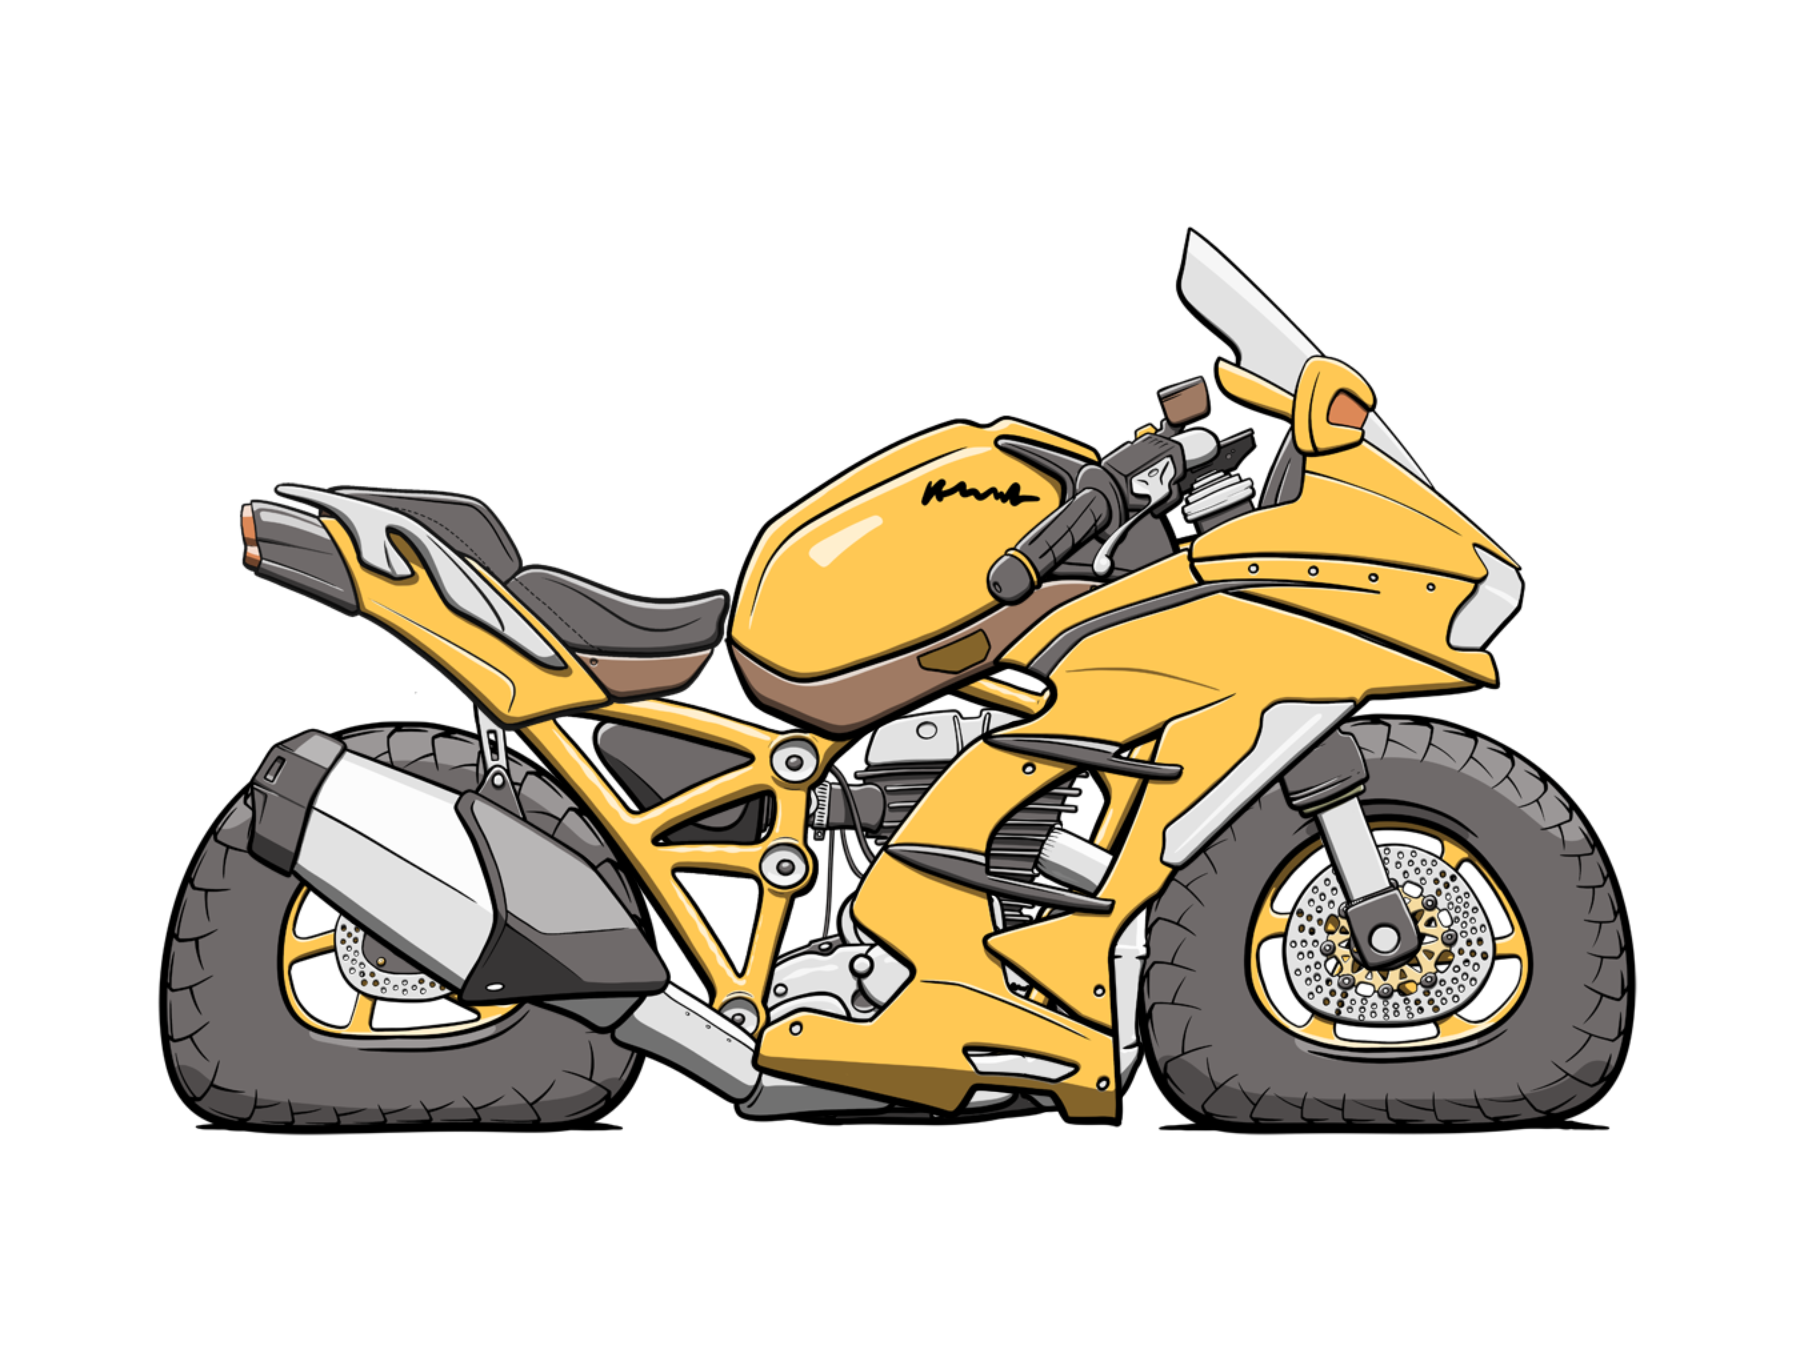 MotoGen #3052 (the racer) by Kitty M on Dribbble